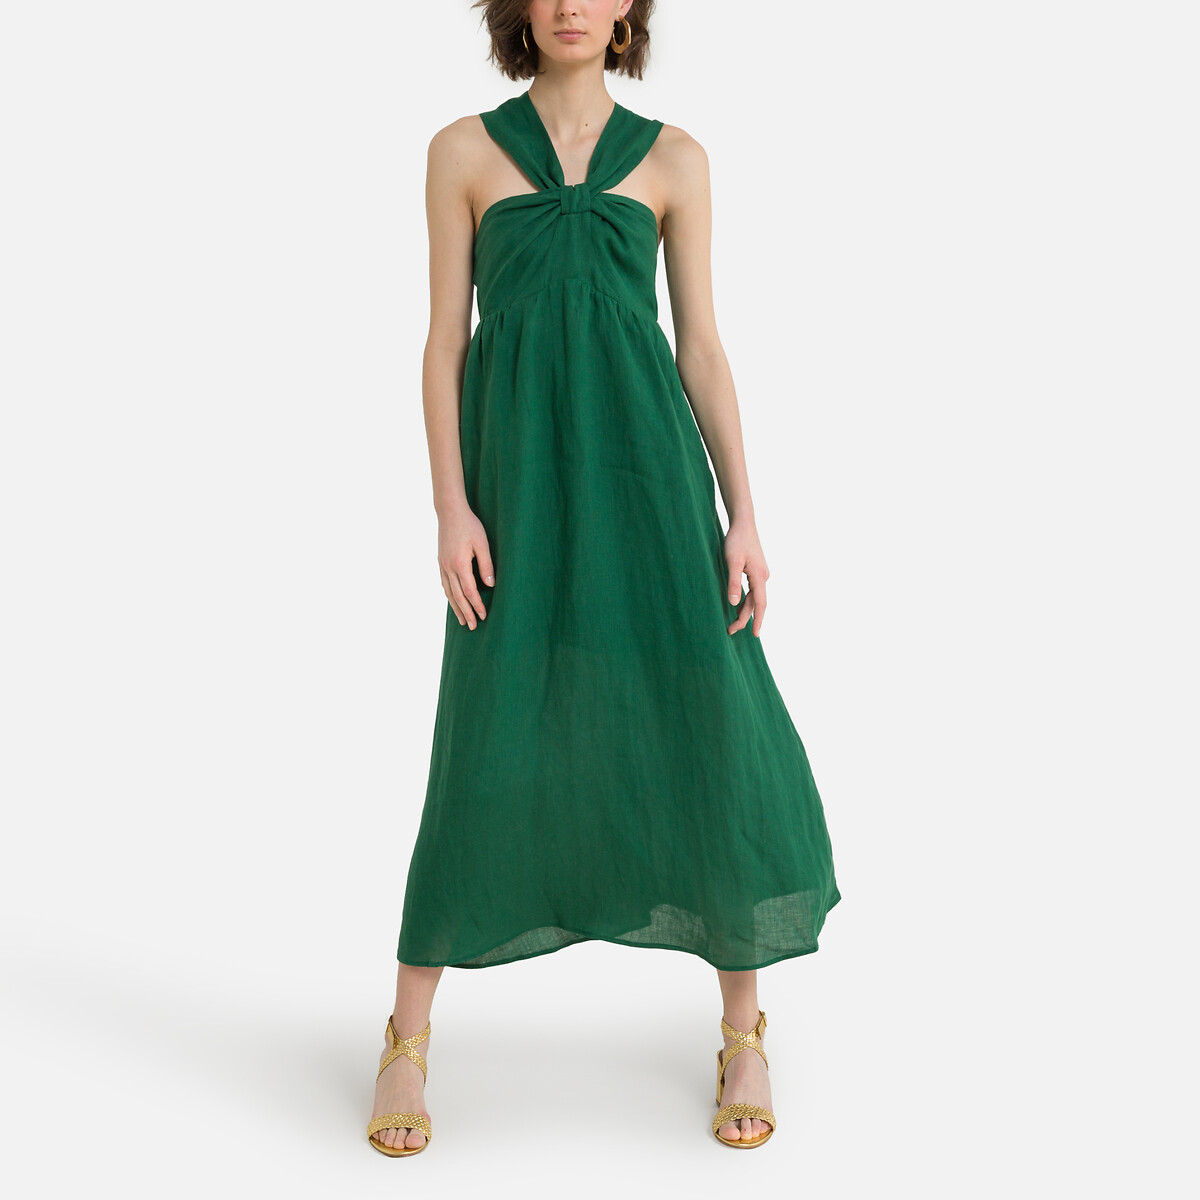 Платье SEE U SOON Длинное с бретельками-завязками 3(L) зеленый, размер 3(L) Длинное с бретельками-завязками 3(L) зеленый - фото 2